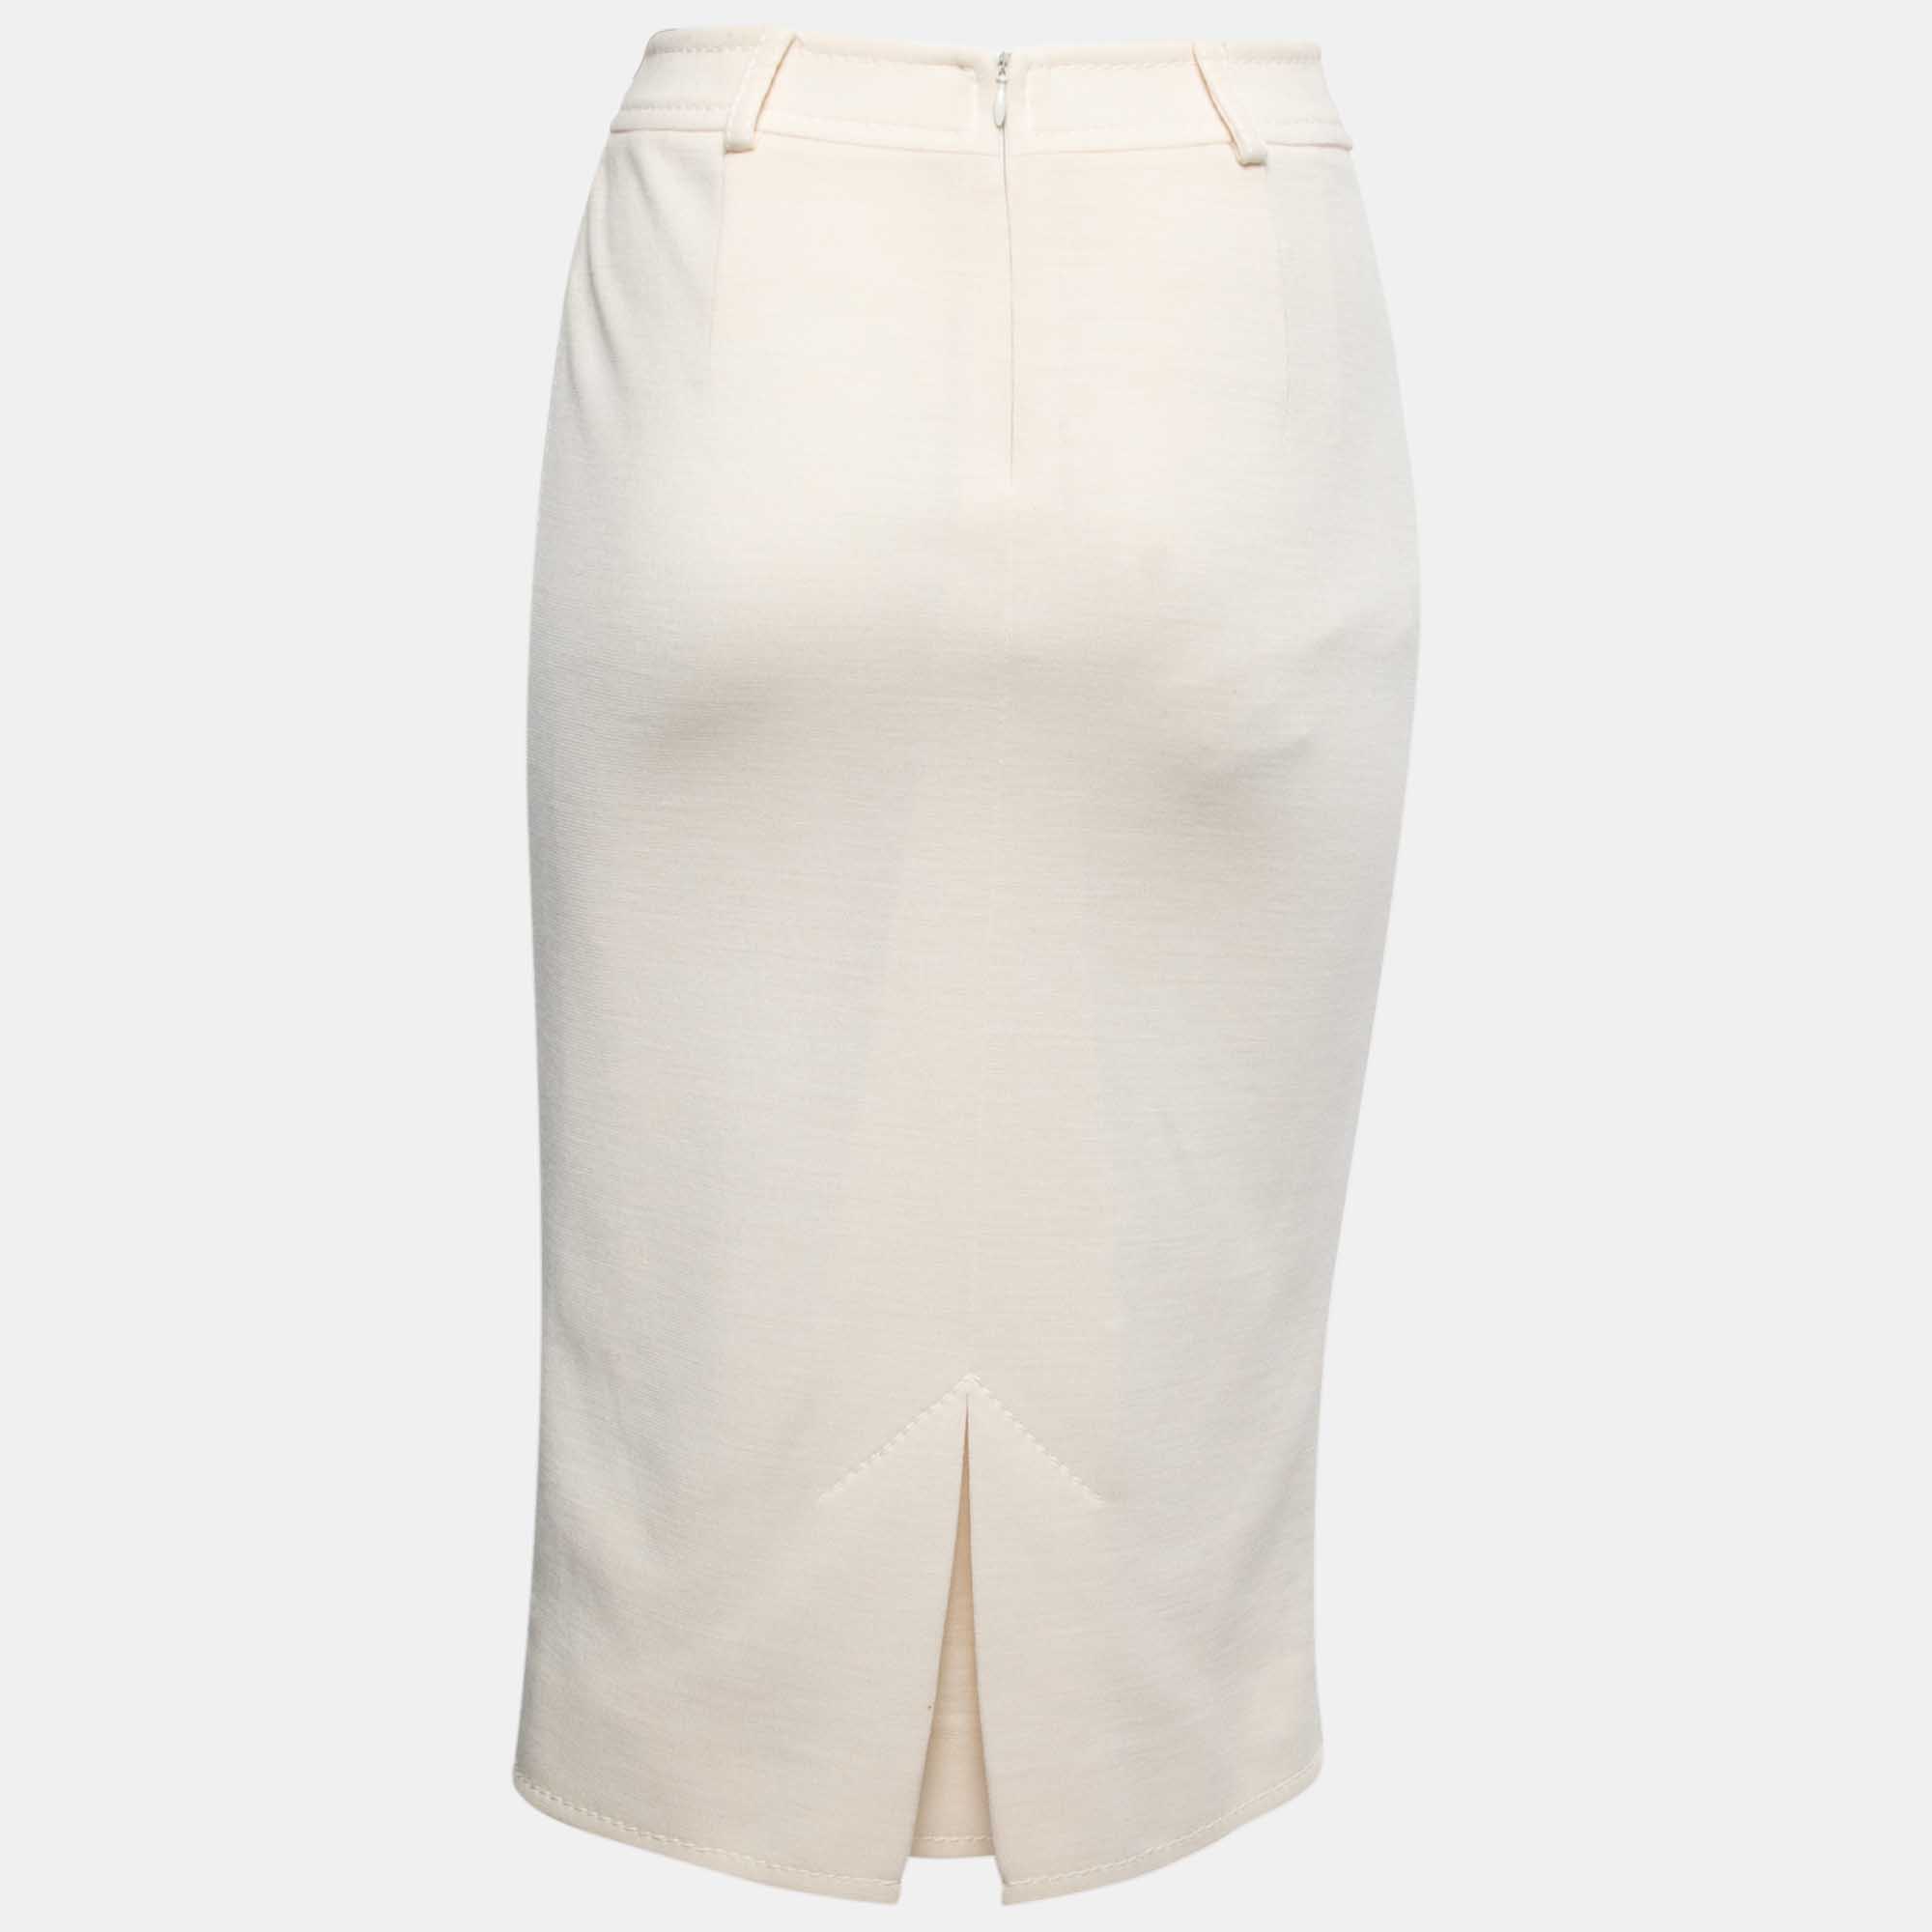 

Christian Dior Boutique Cream Wool Blend Pencil Skirt